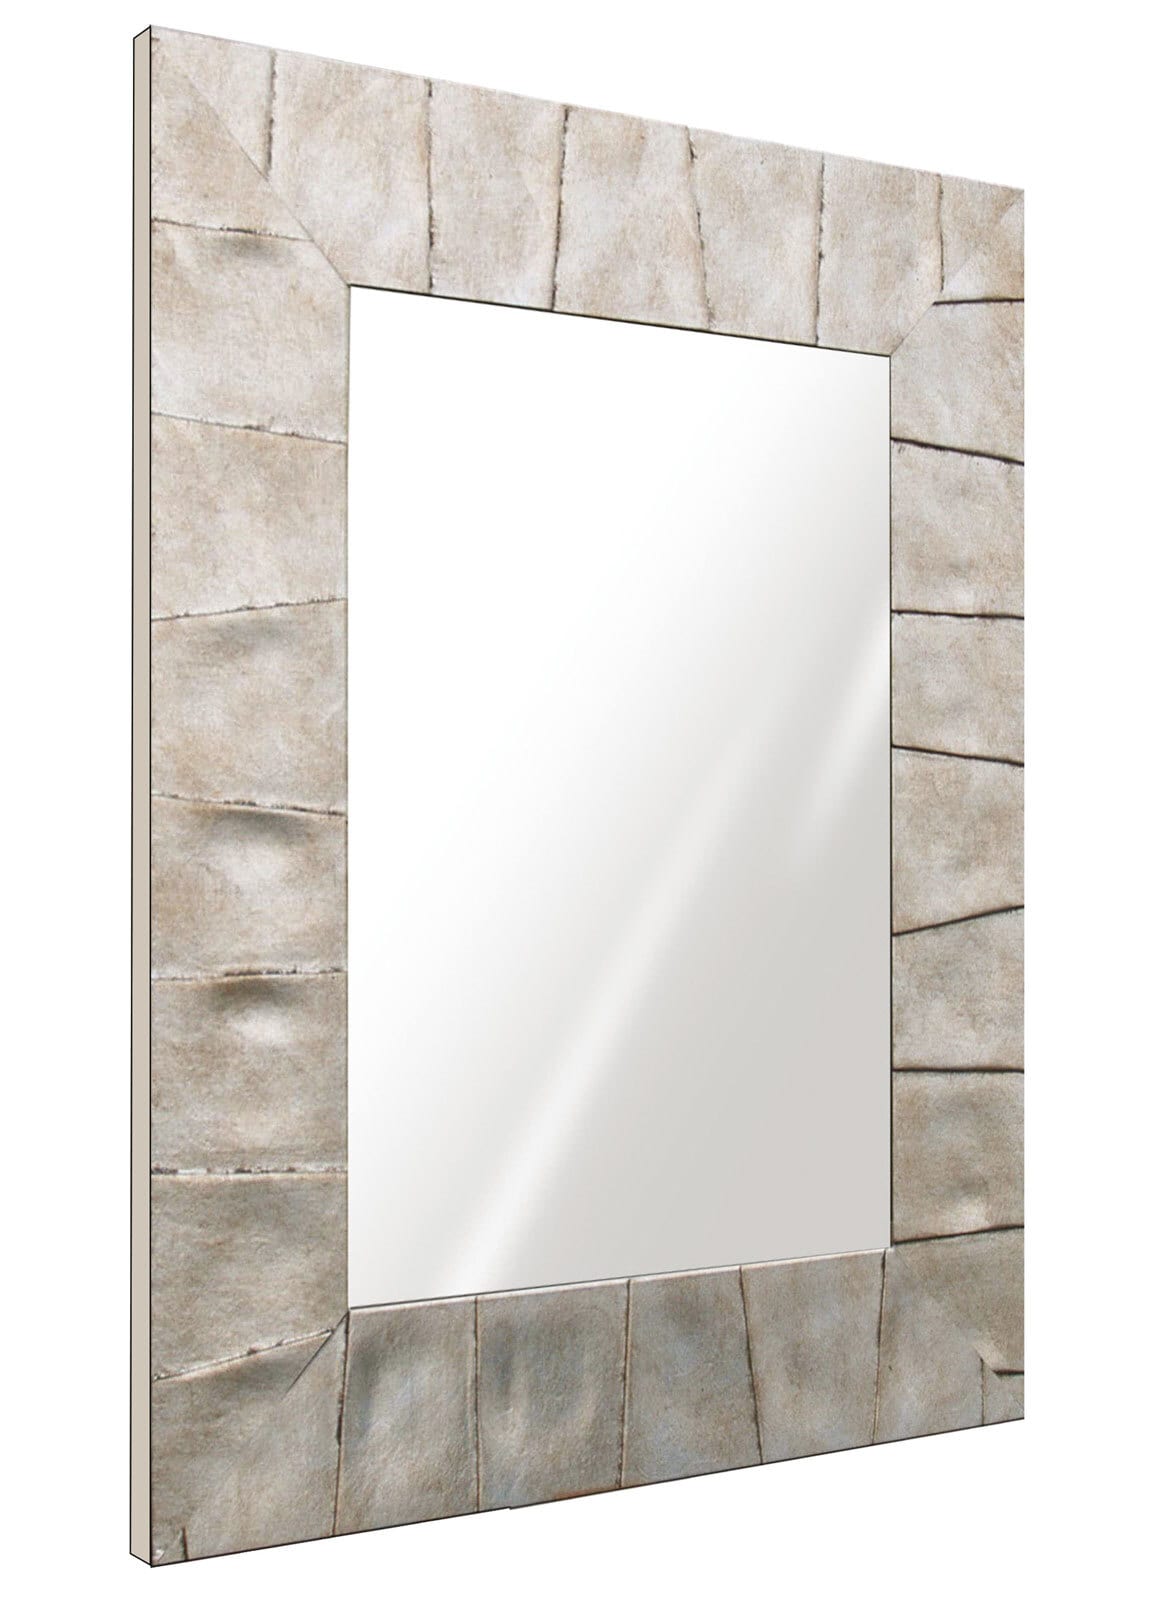 Spiegel 78 x 118 cm Rahmen Silber lackiert